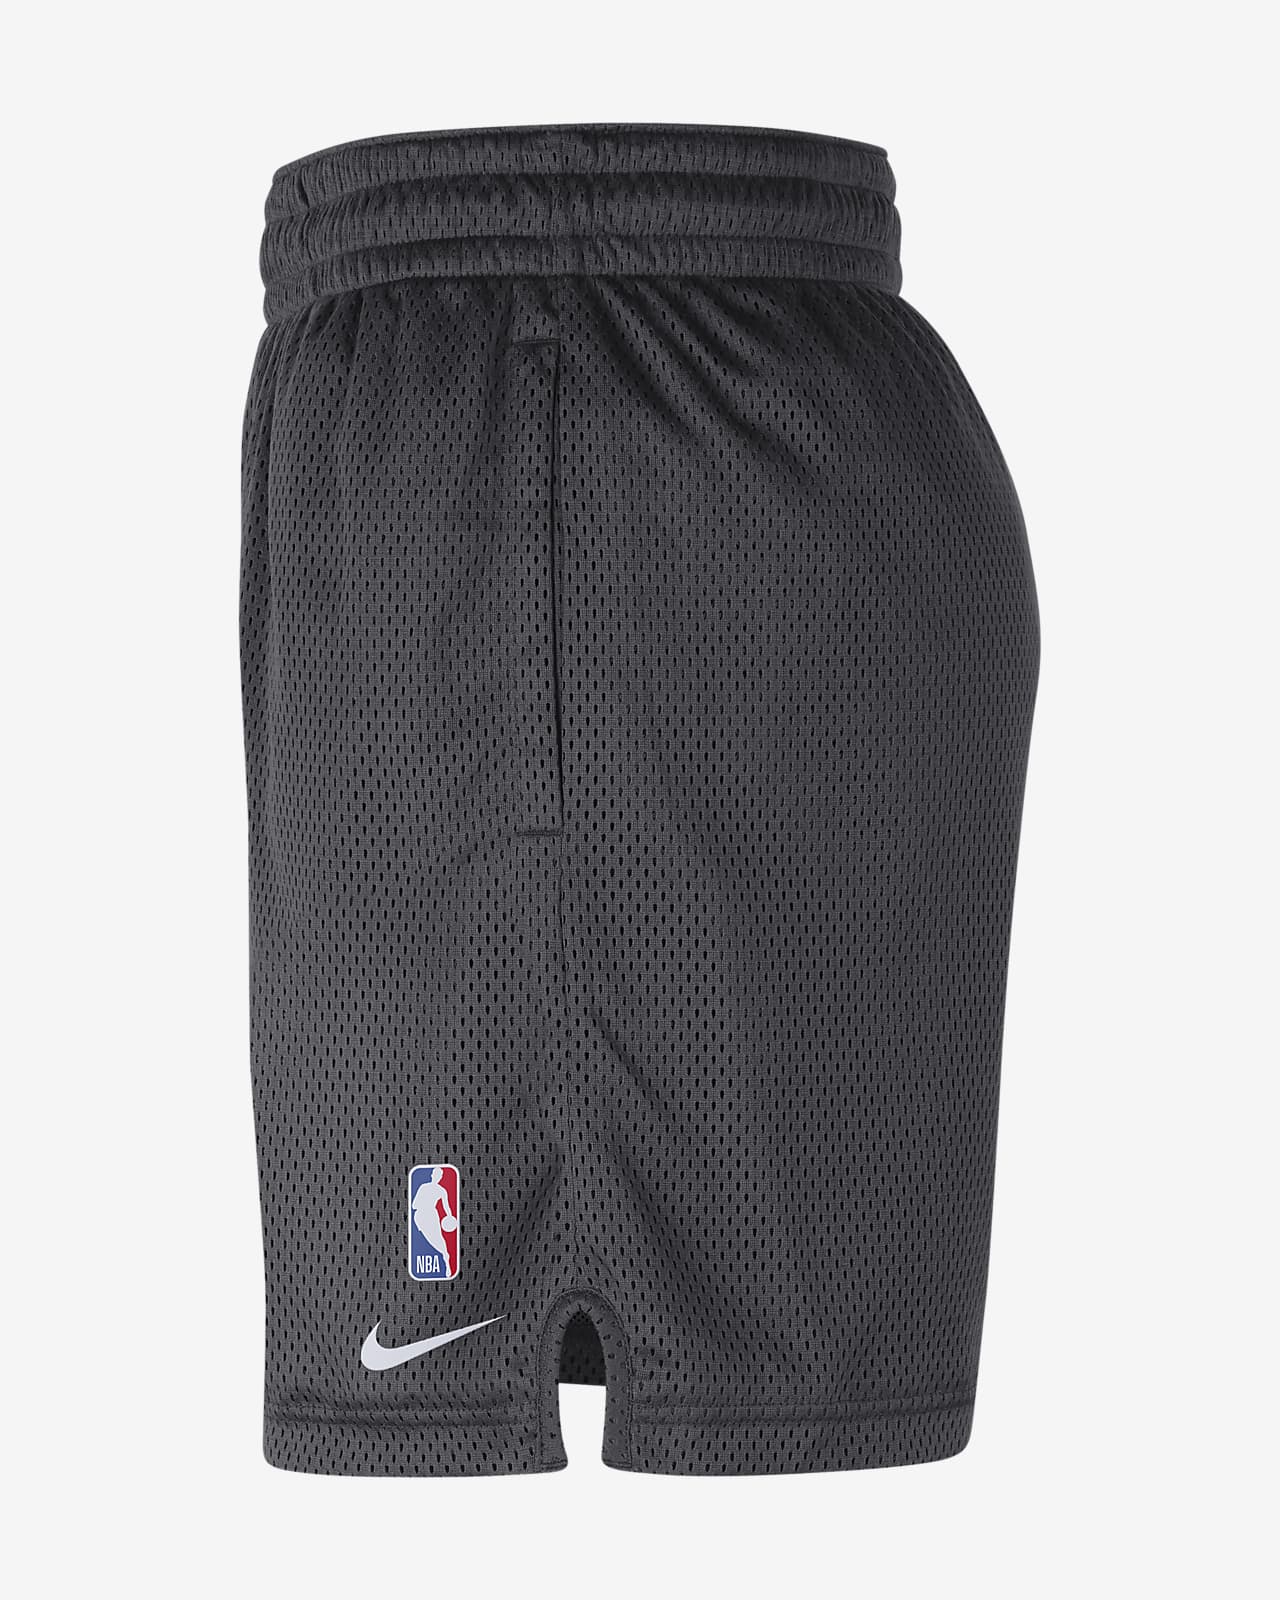 wenselijk Instrument Productief Brooklyn Nets Men's Nike NBA Shorts. Nike.com